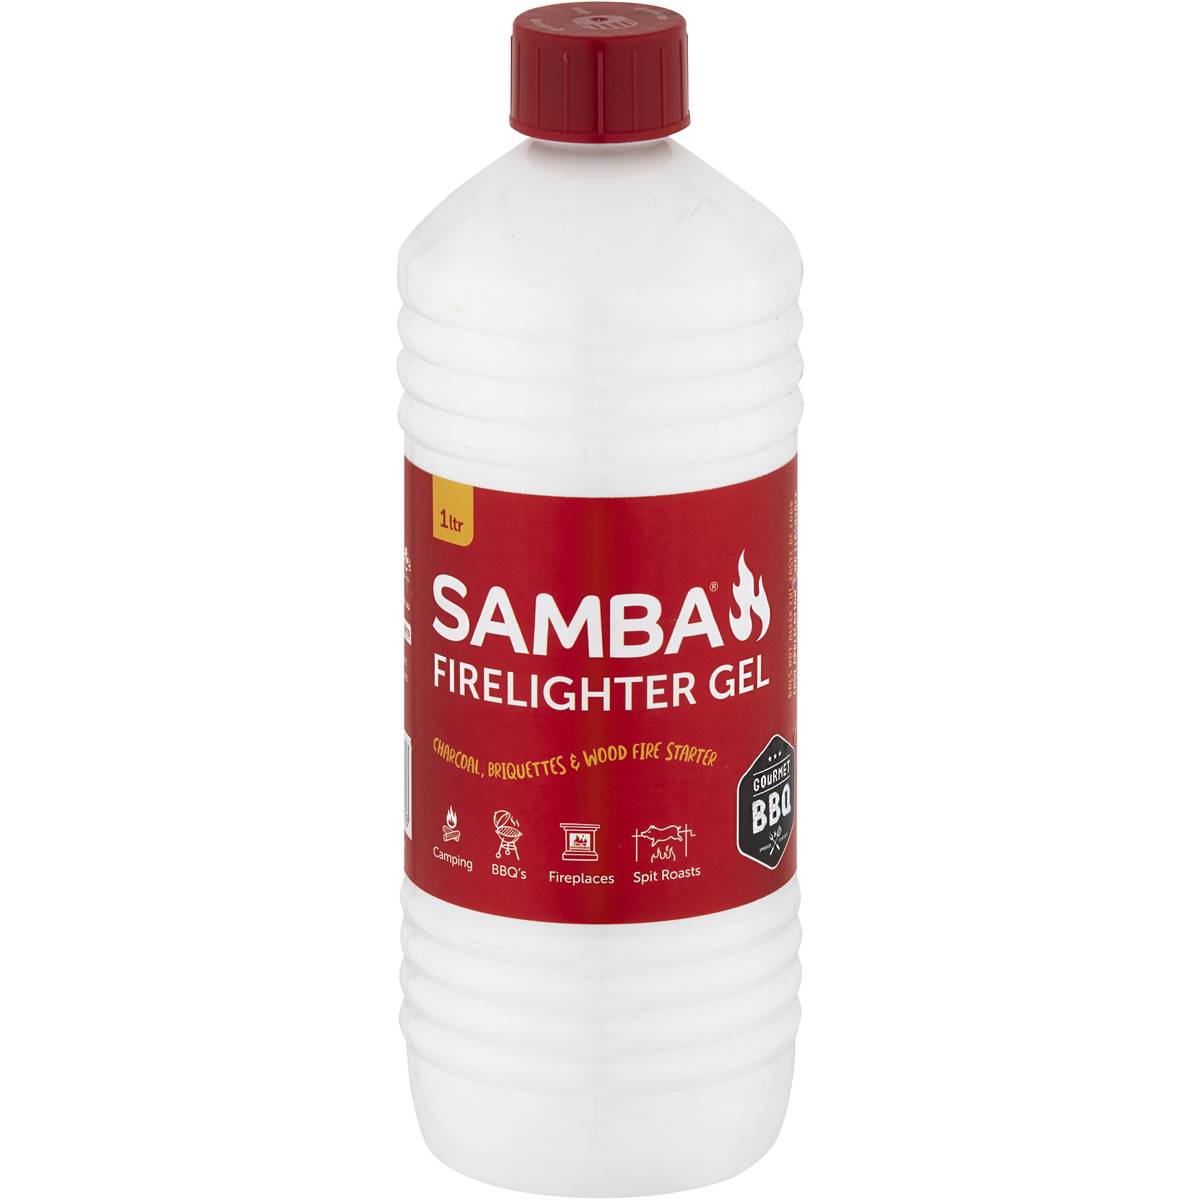 Samba Fire Lighter Gel 1L